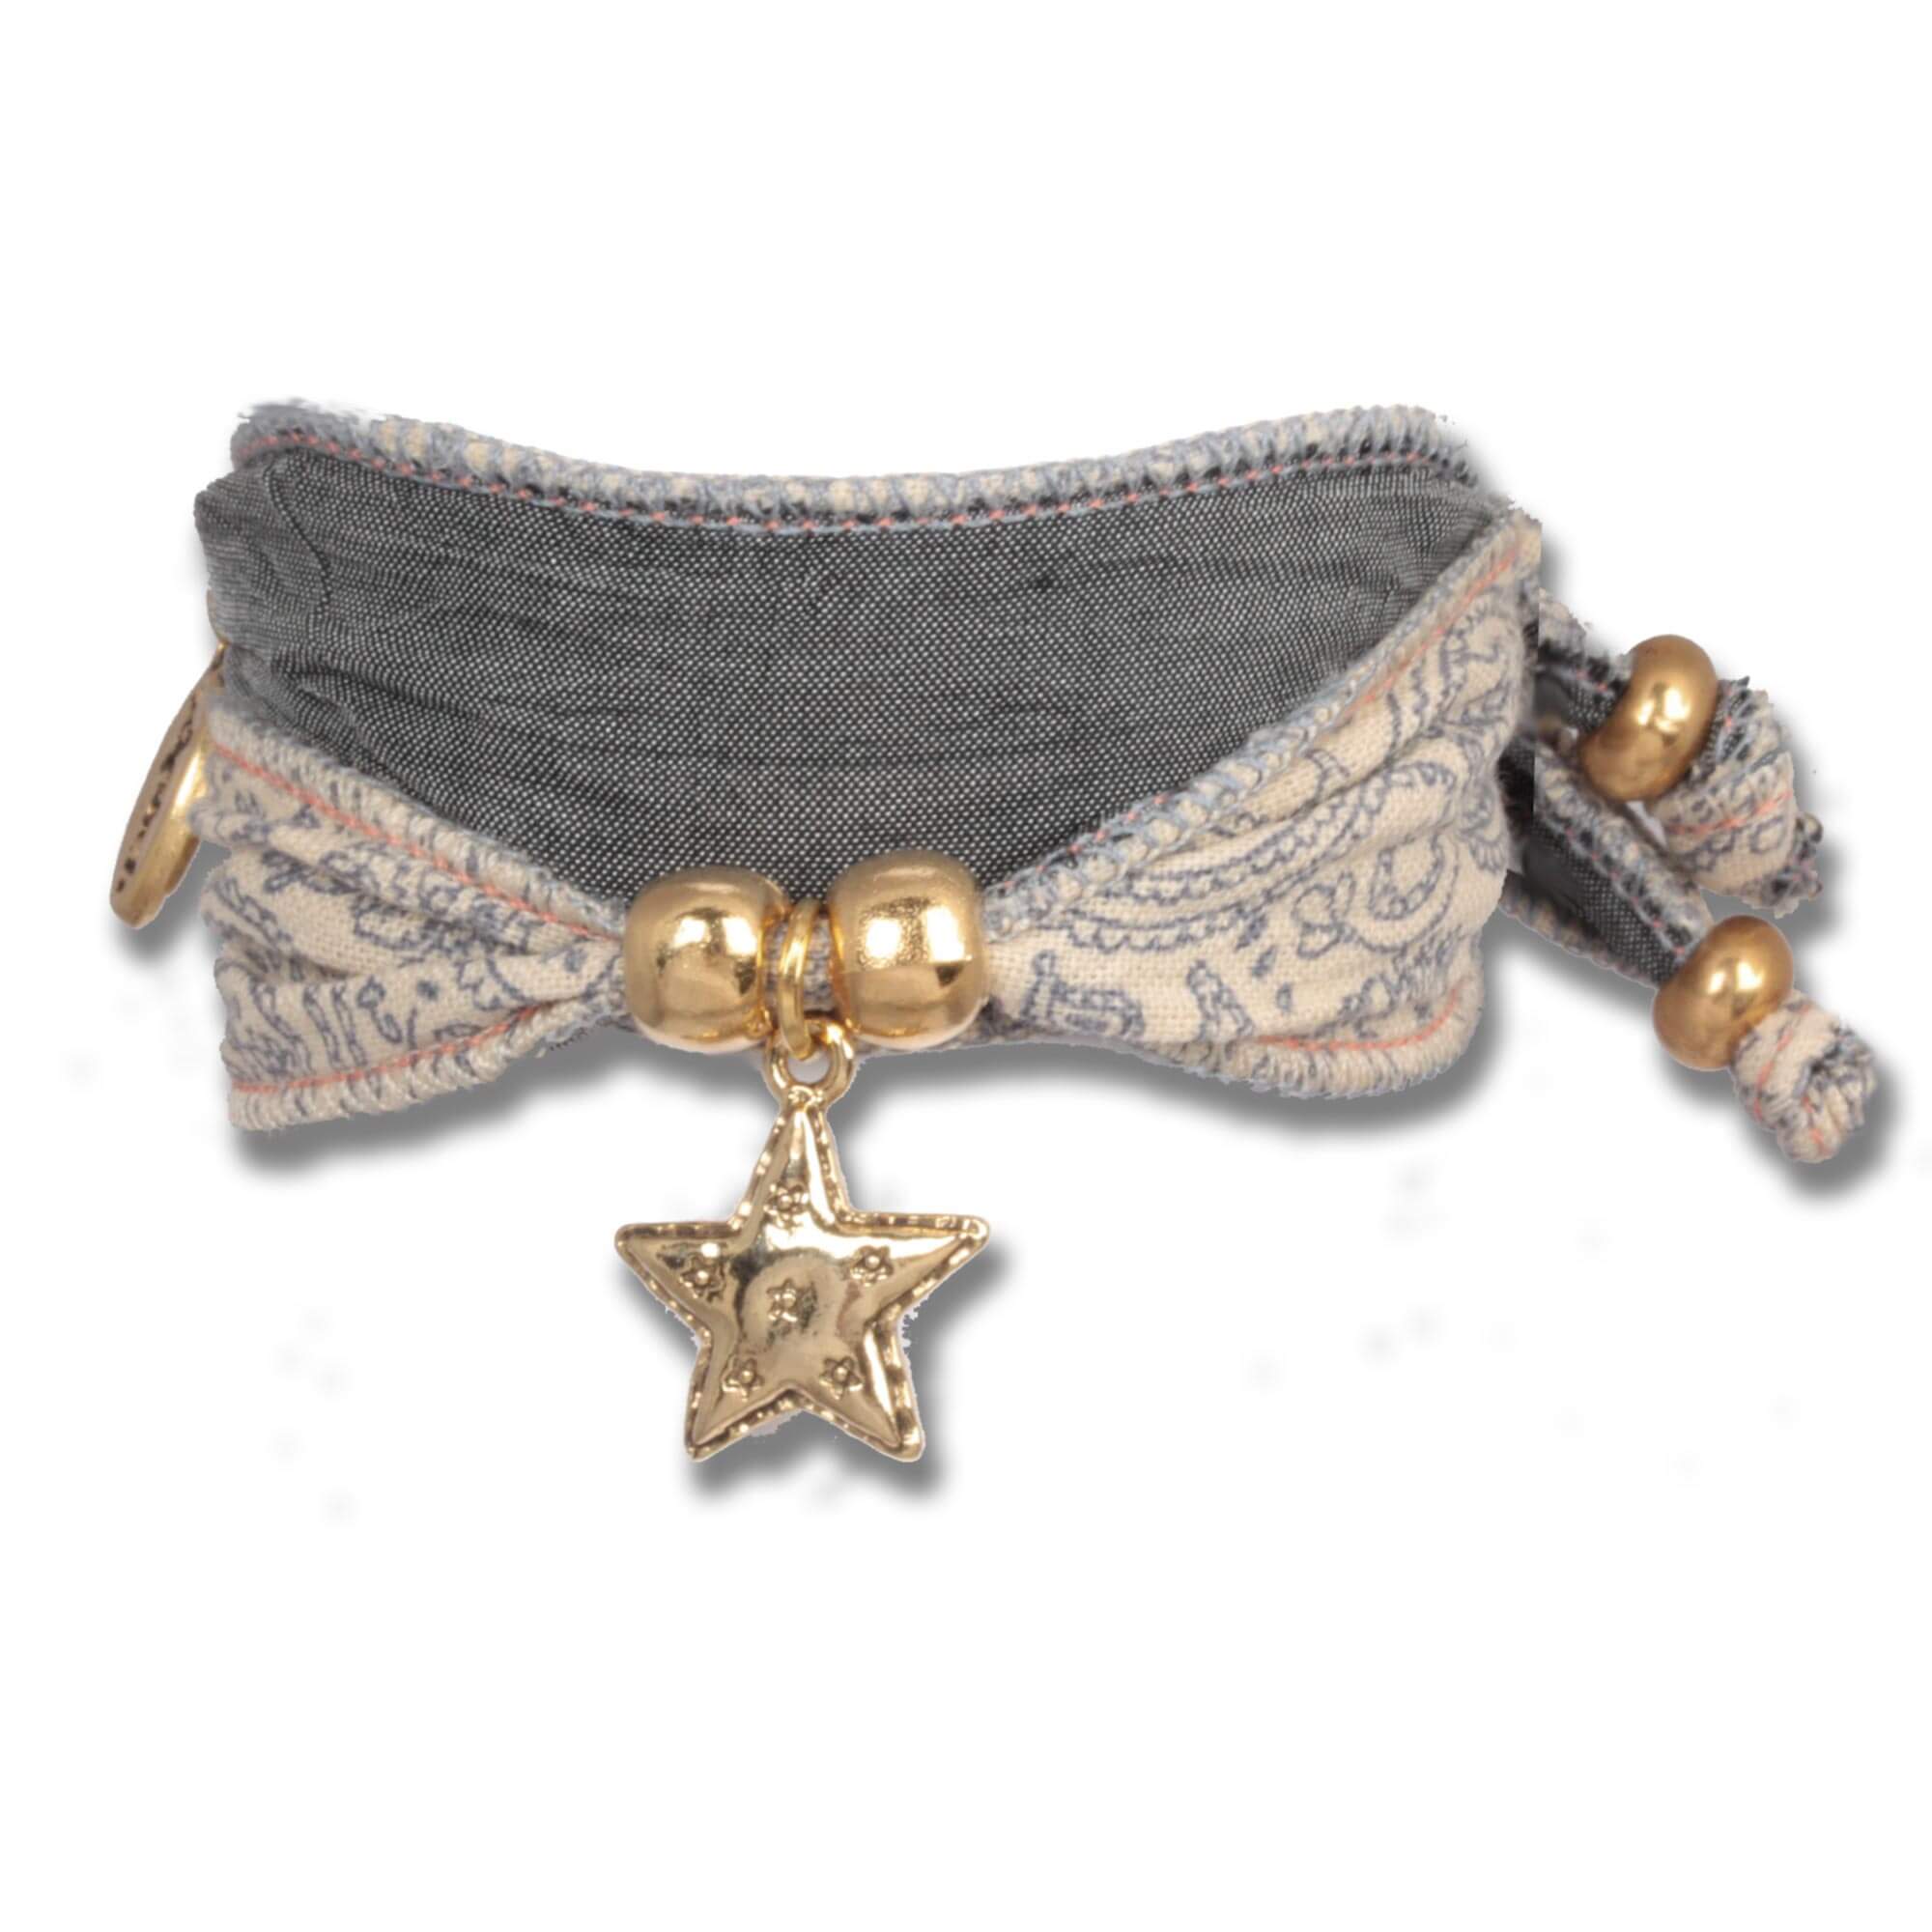 Paisley Cream Starseed - Vintage bracelet from Indian sari fabrics